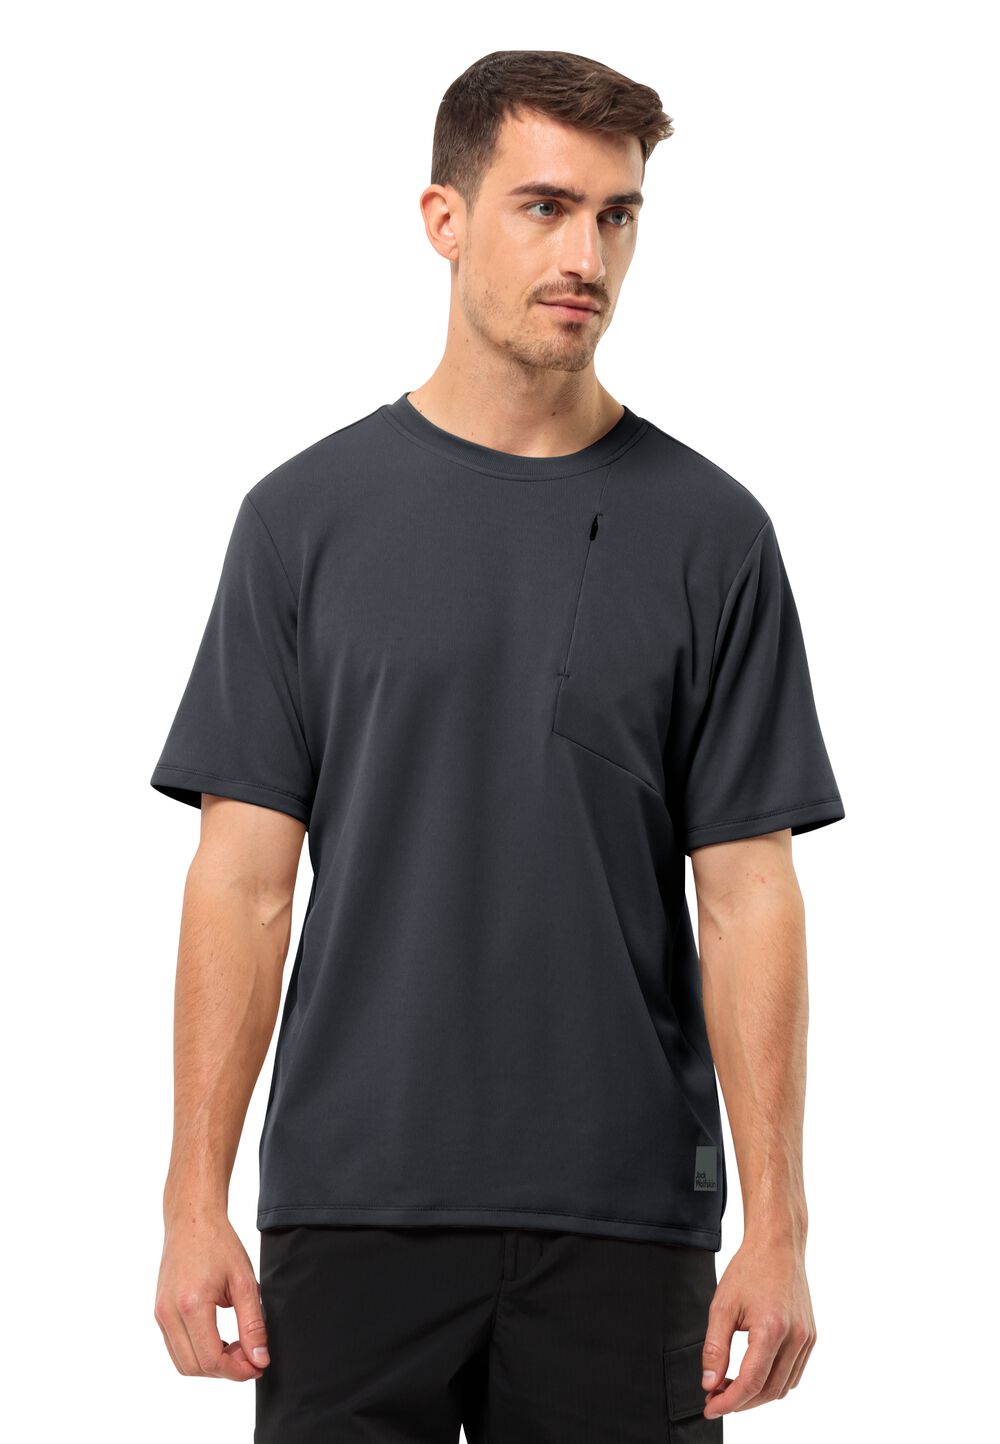 Jack Wolfskin Bike Commute T-Shirt Men Functioneel shirt Heren XL phantom